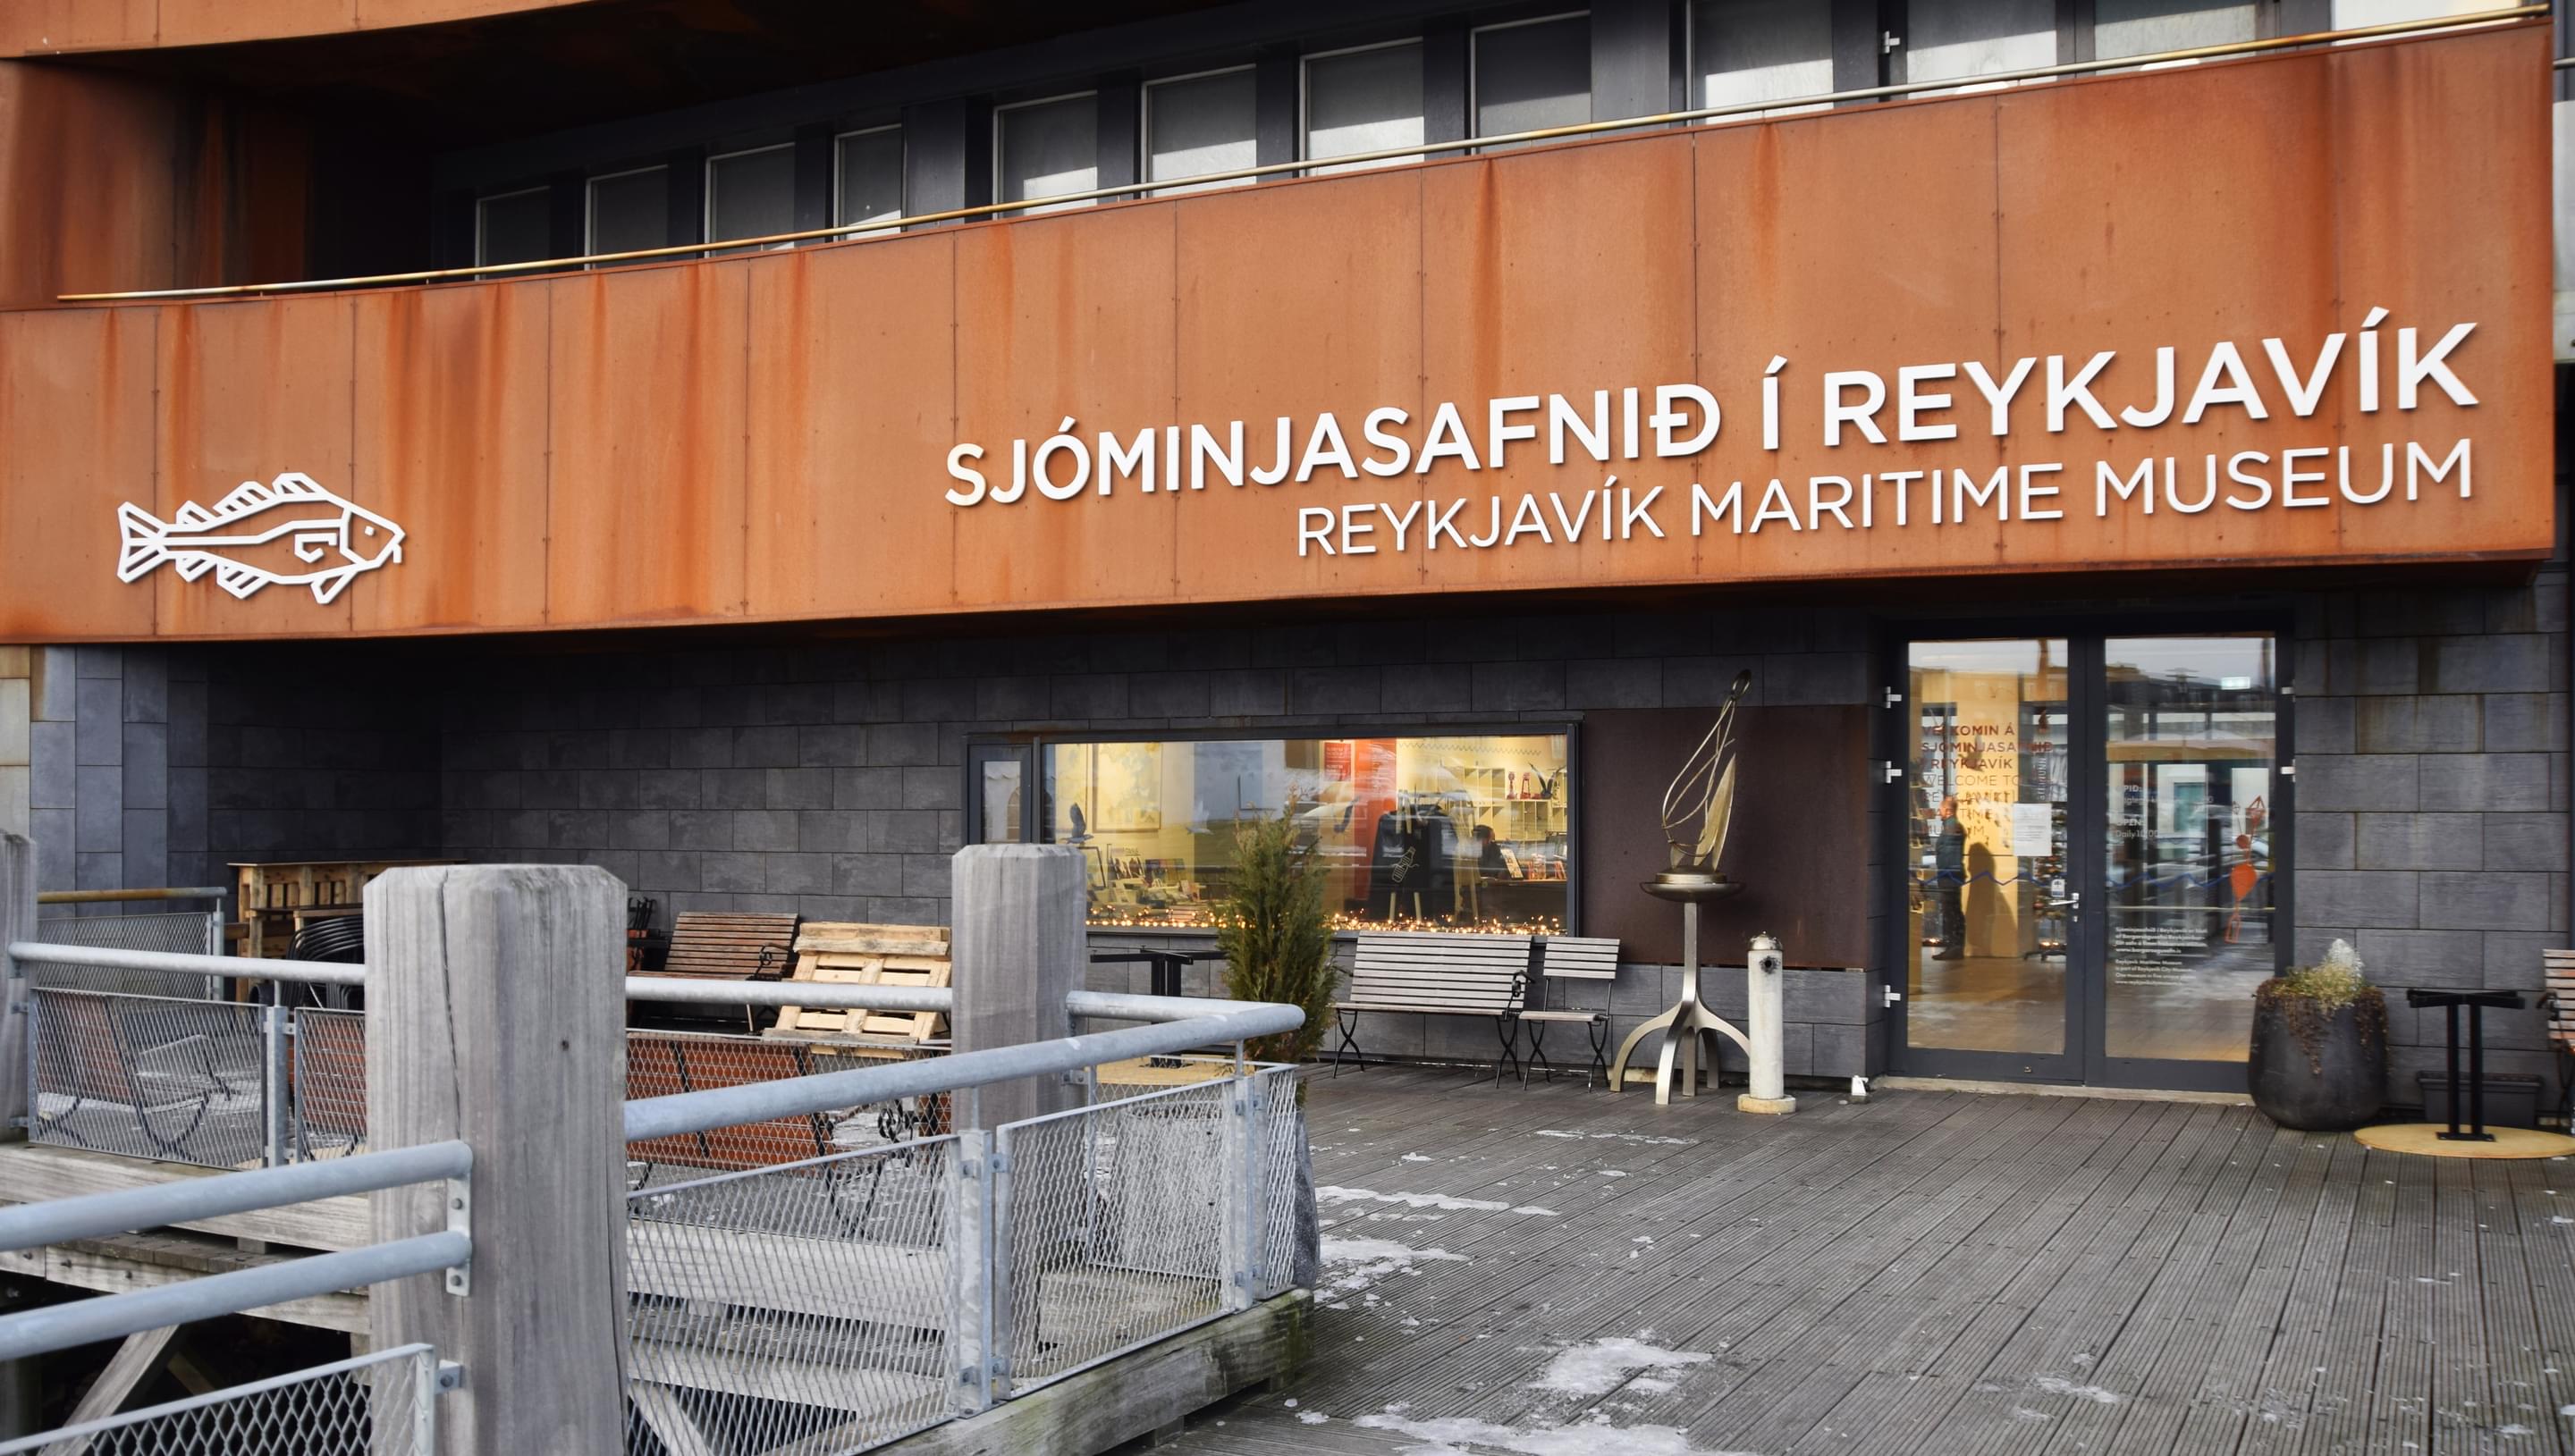 Reykjavik Maritime Museum Overview